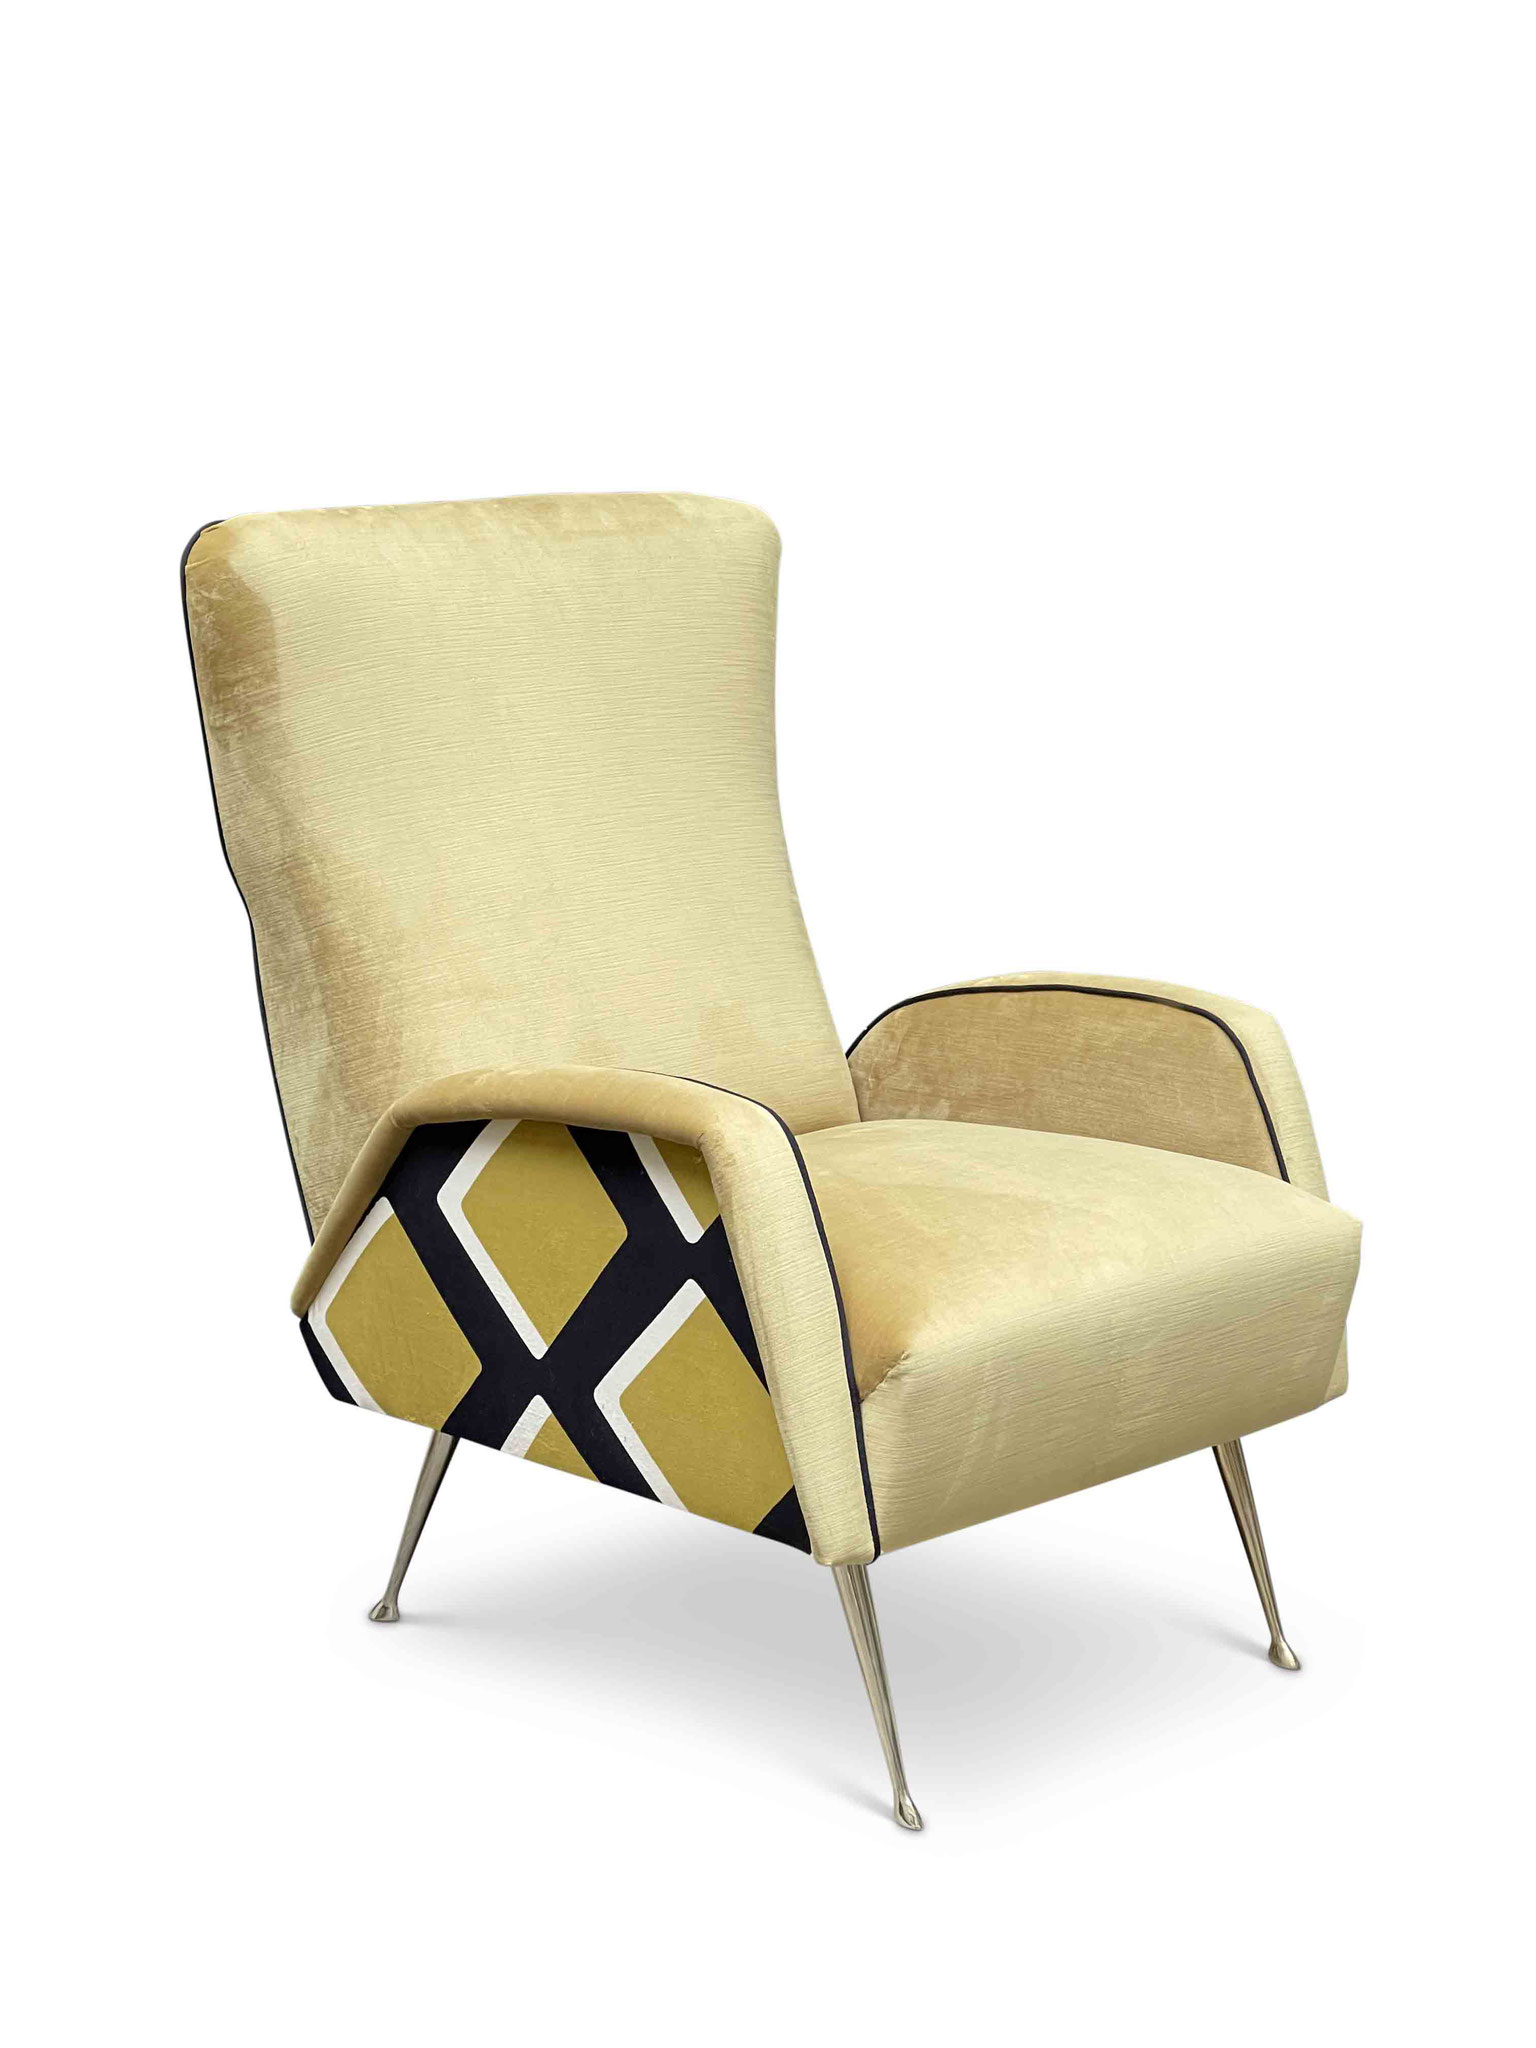 italian mid century modern chair nyc